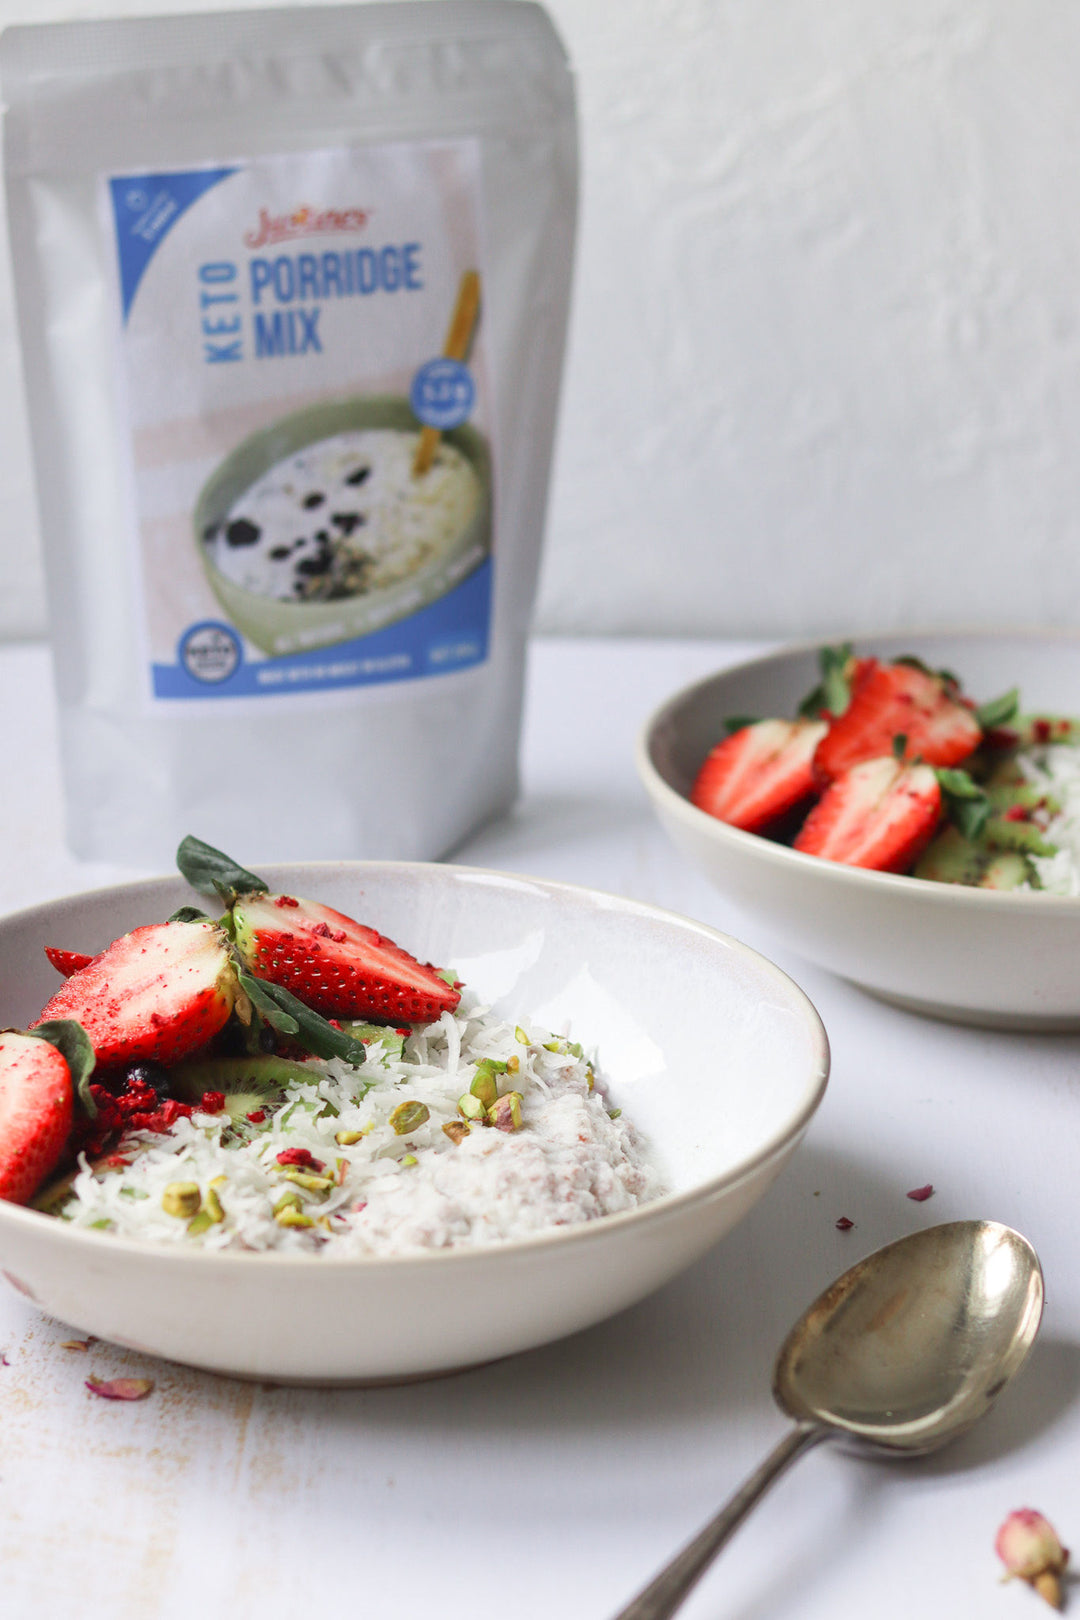 strawberry coconut keto porridge bowls with justine's keto porridge mix